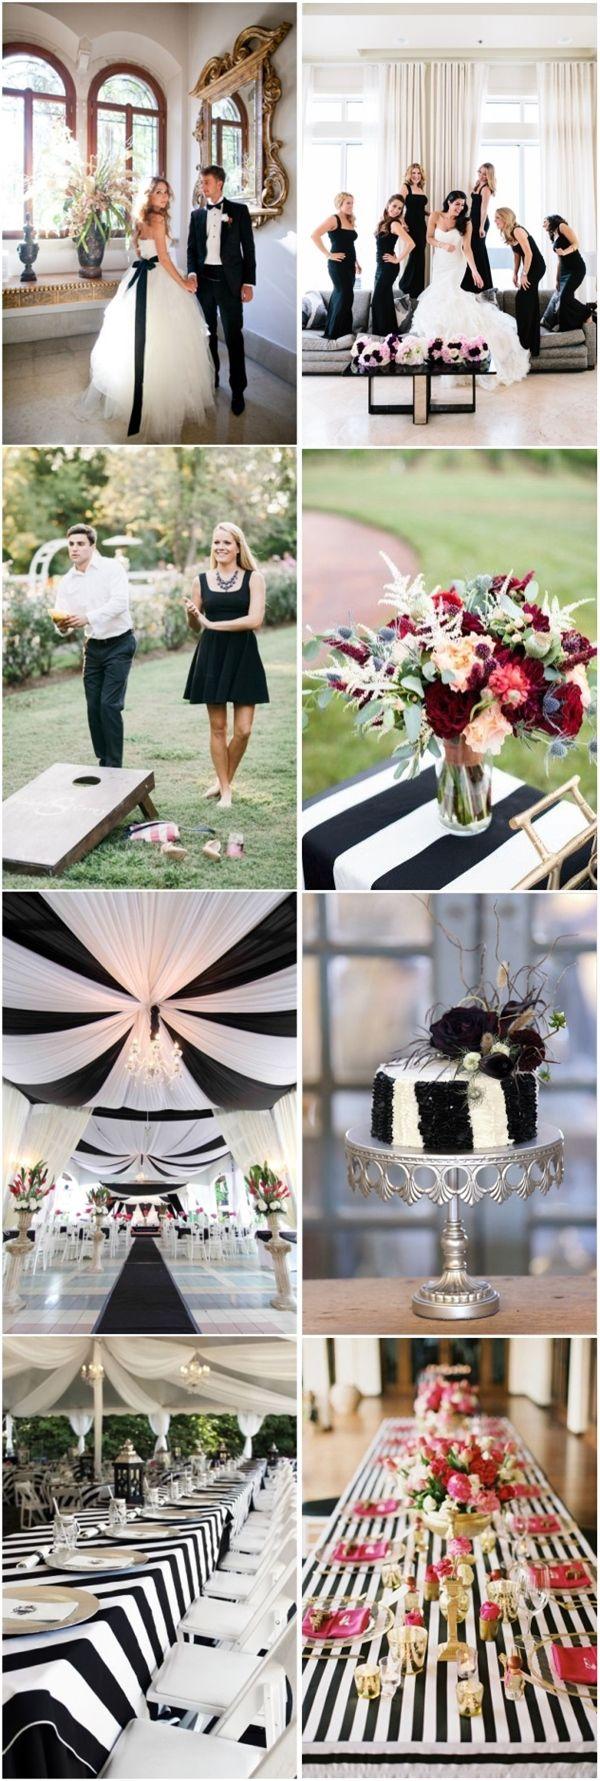 زفاف - 45 Black And White Wedding Ideas To Love